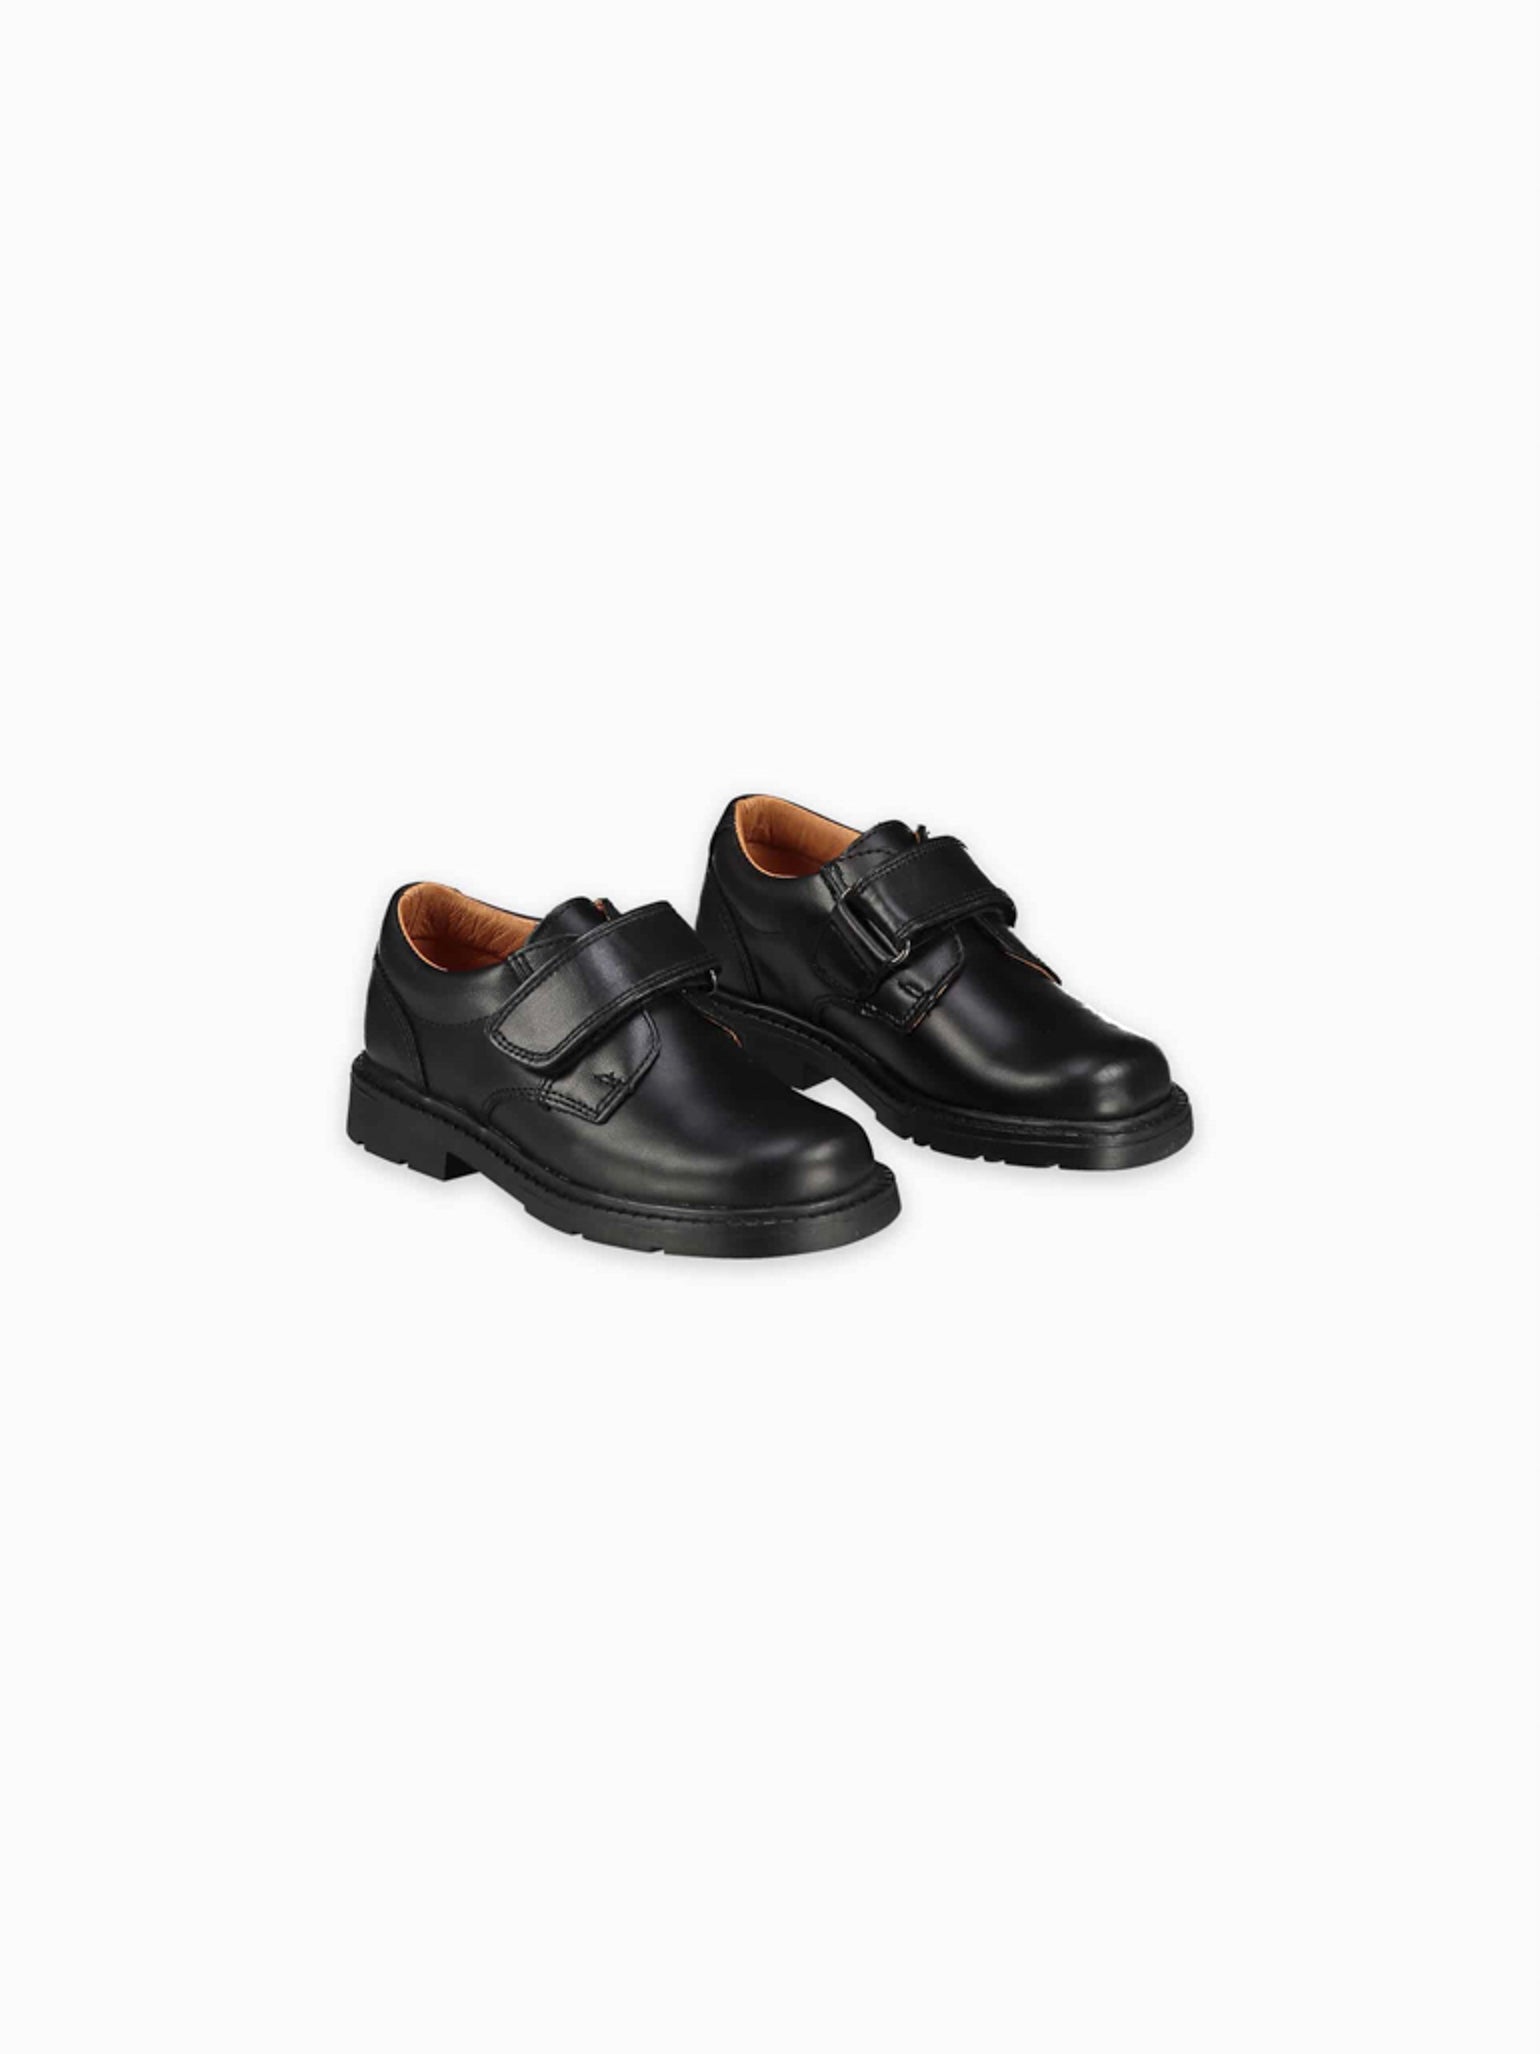 Black Leather Boy Classic School Shoes